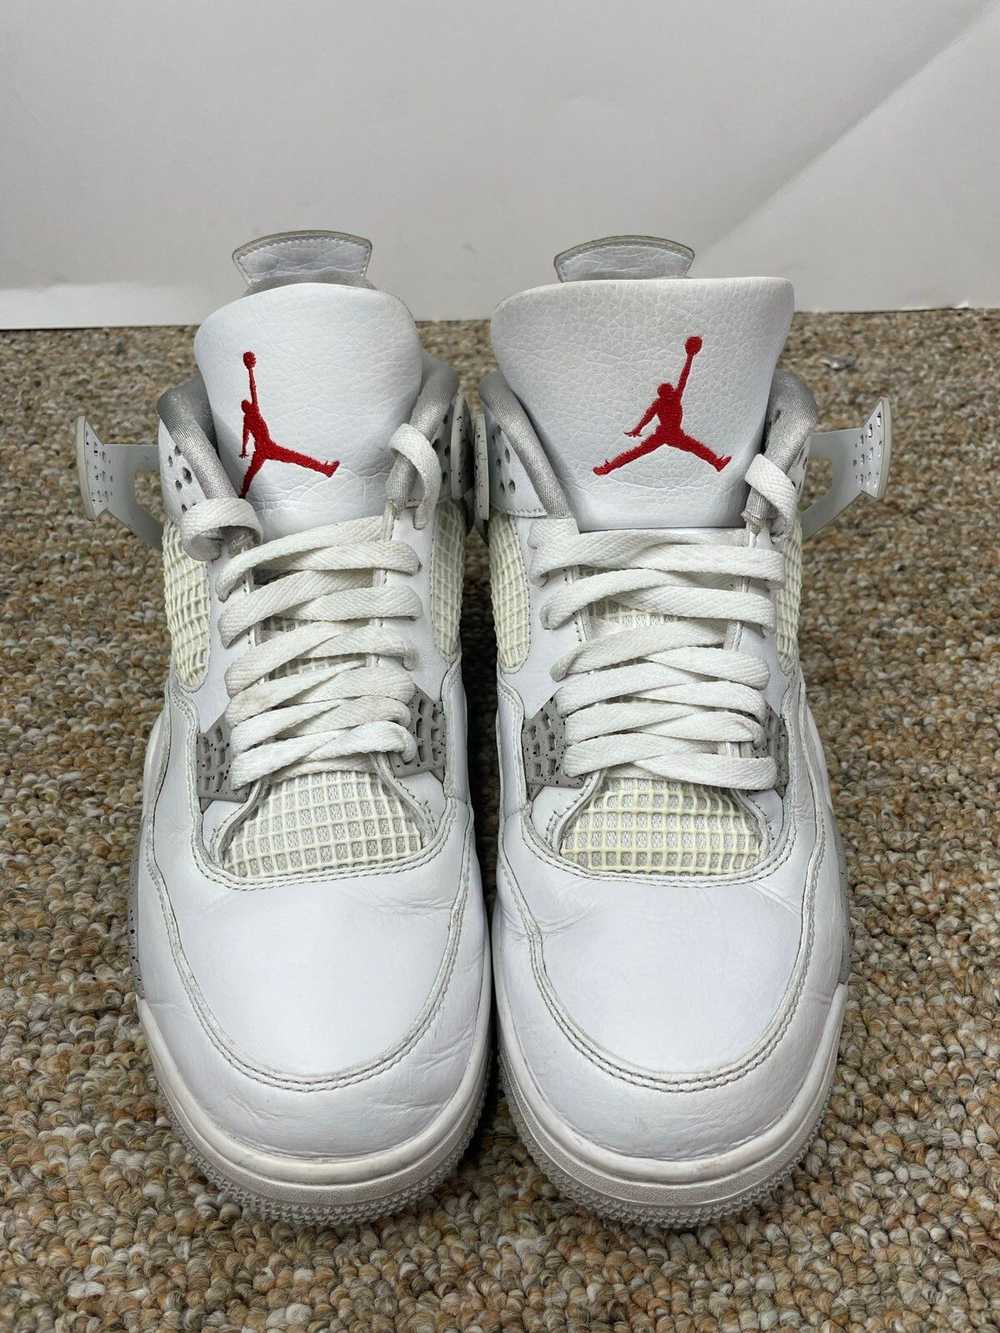 Jordan Brand Air Jordan 4 Retro White Oreo - image 4